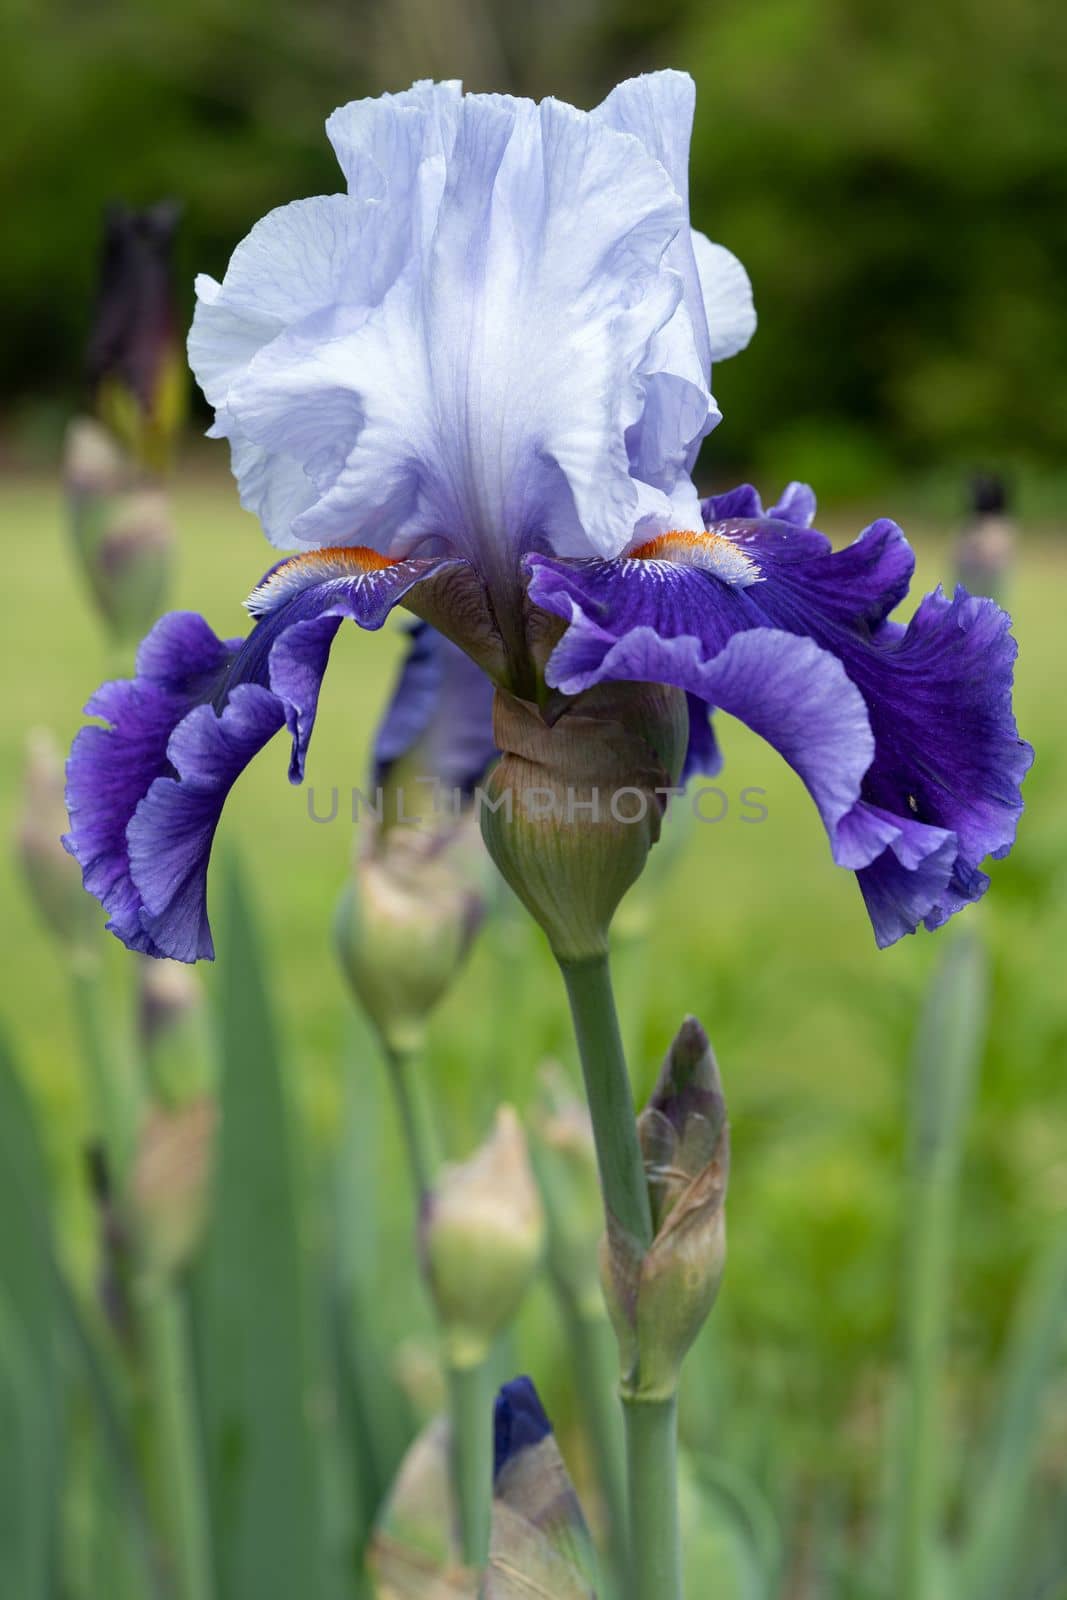 German iris (Iris barbata), close up image of the flower head